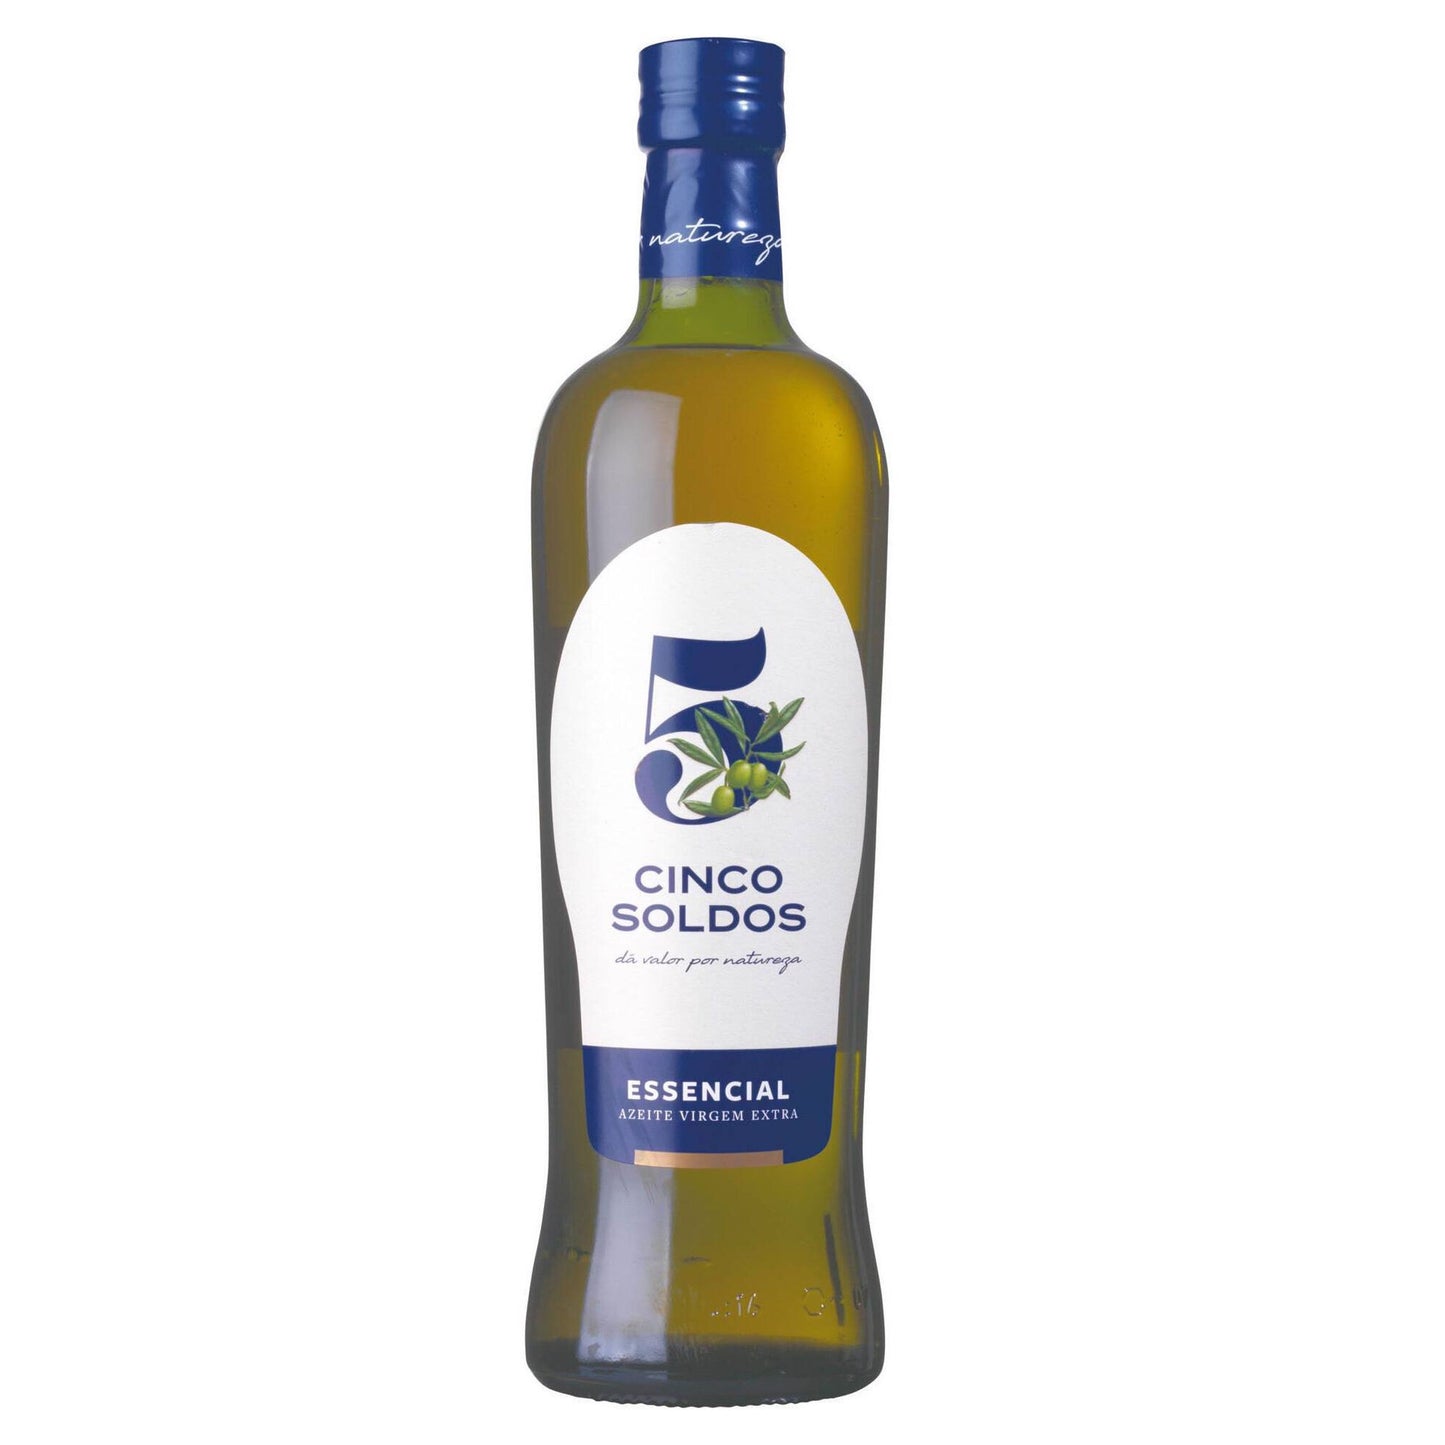 Essential Extra Virgin Olive Oil Five Soles 750ml